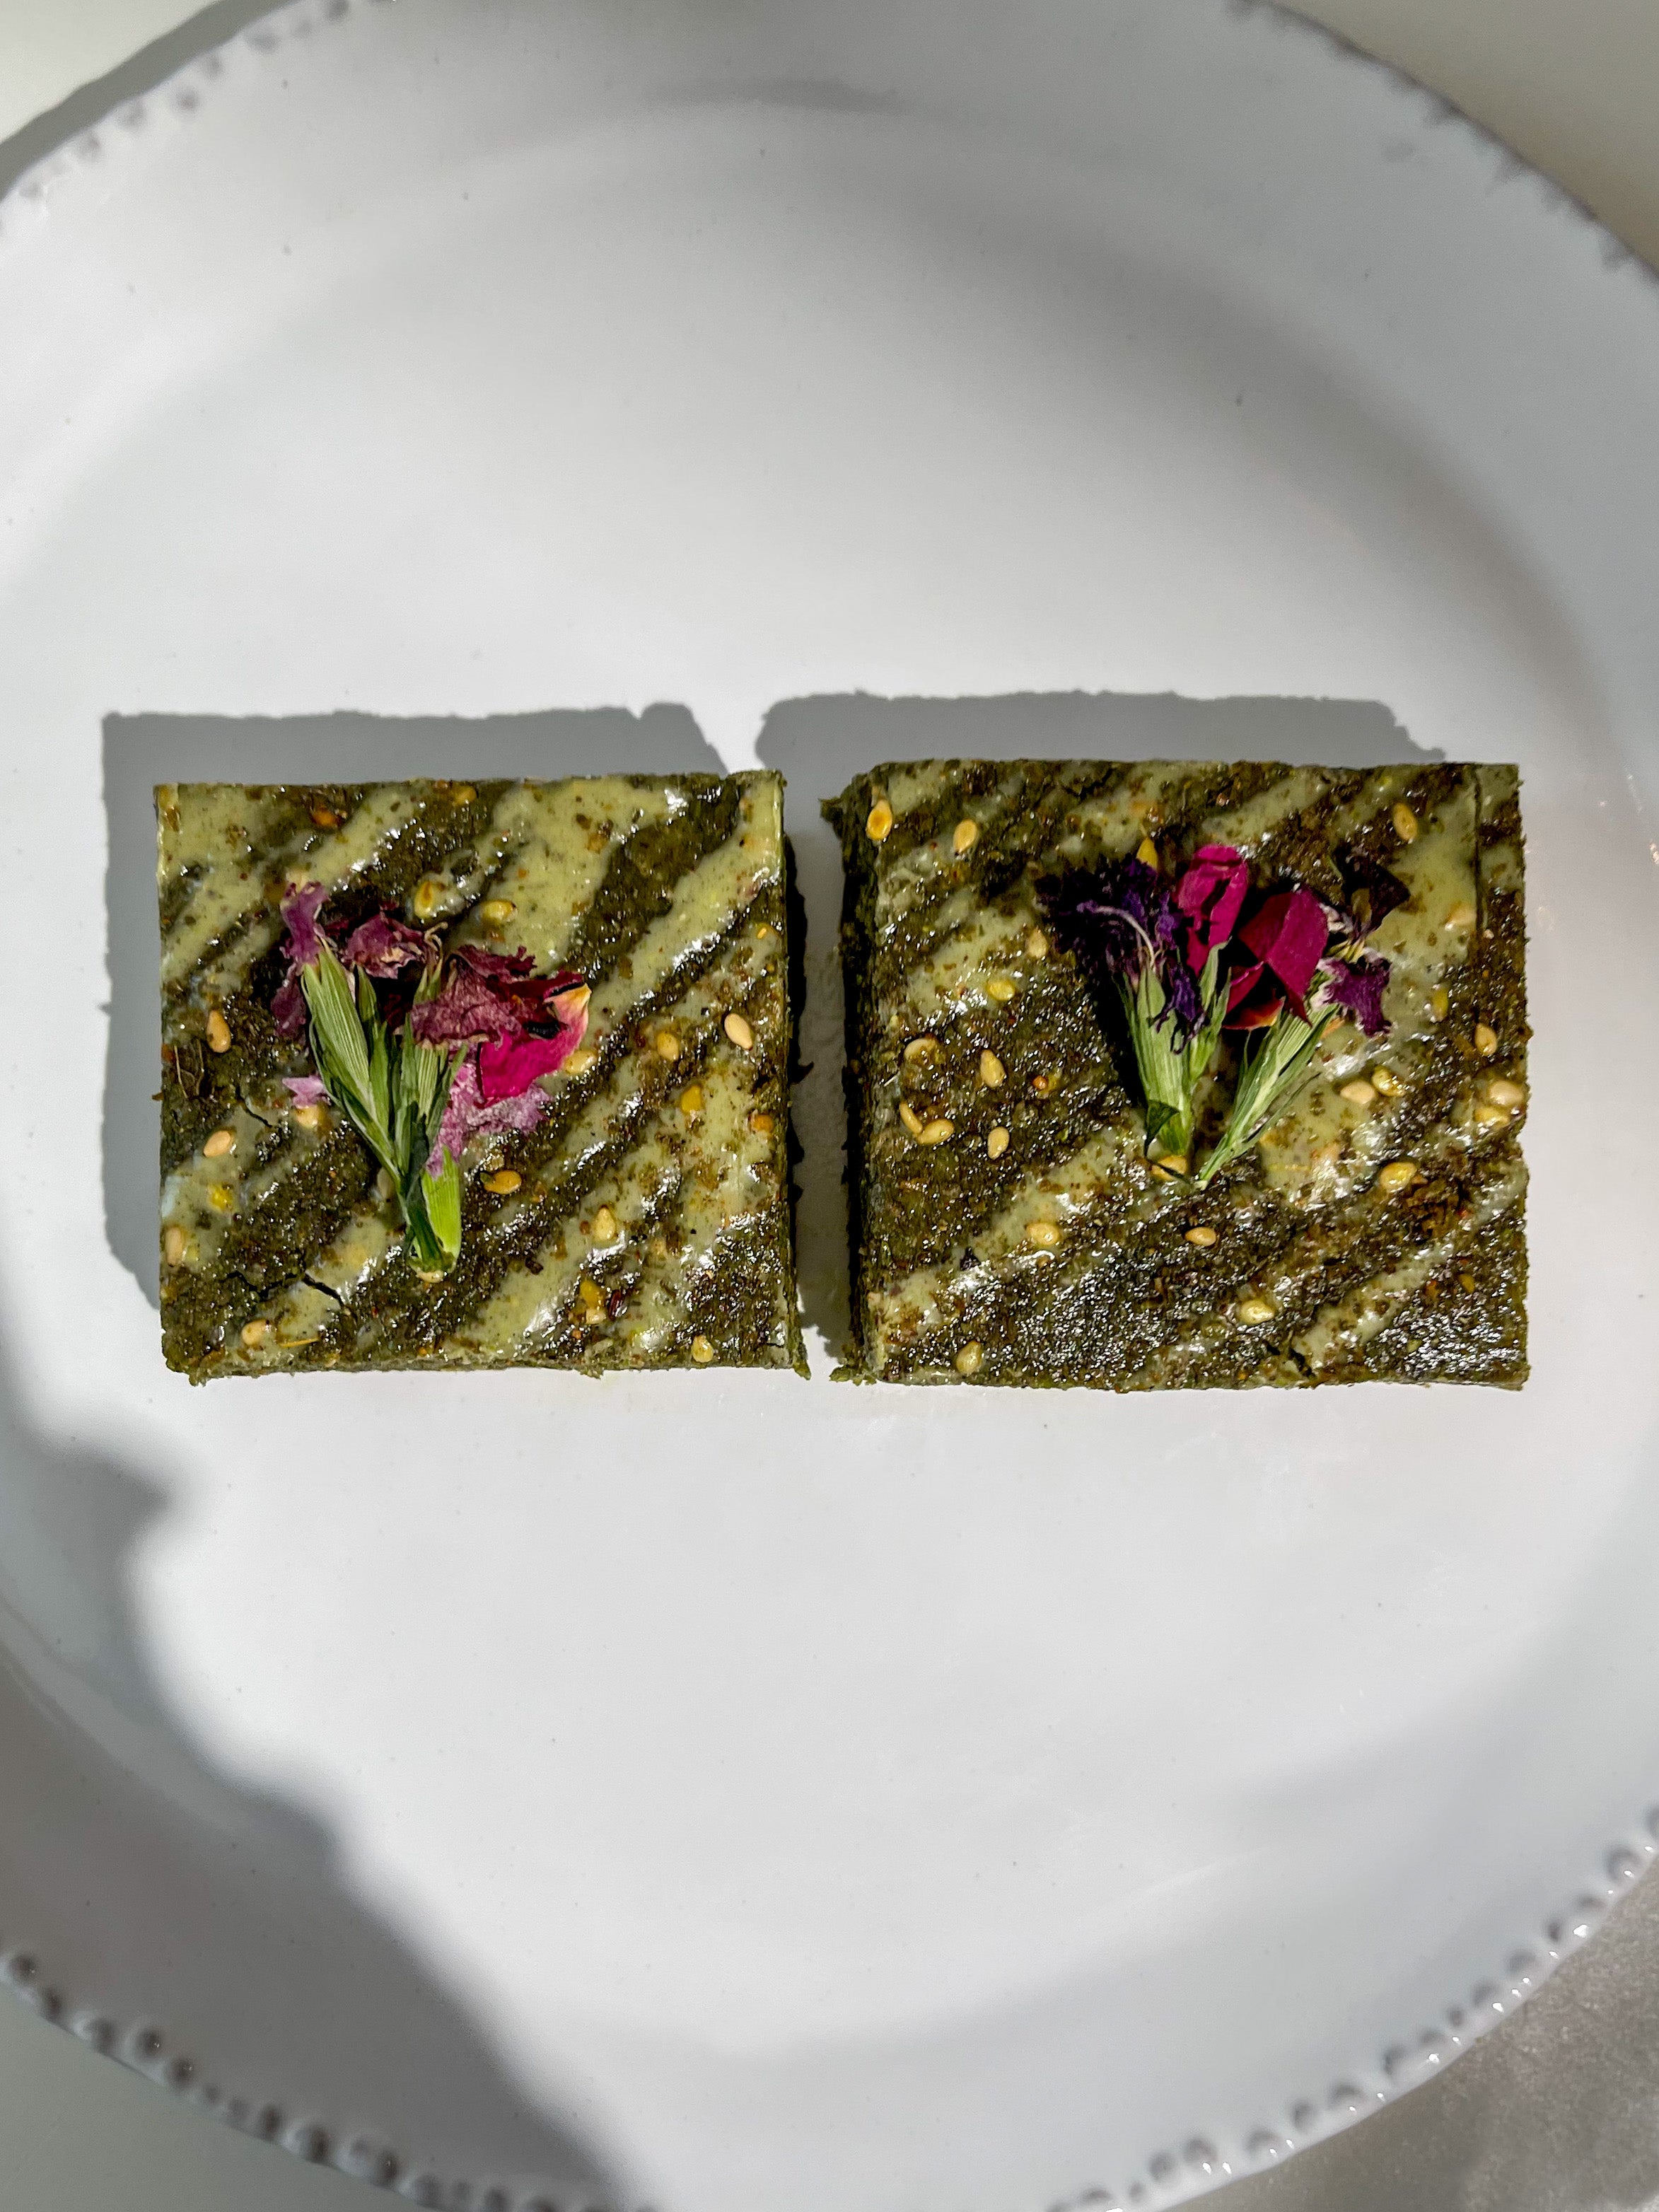 plate of za'atar and pistachio snack bars